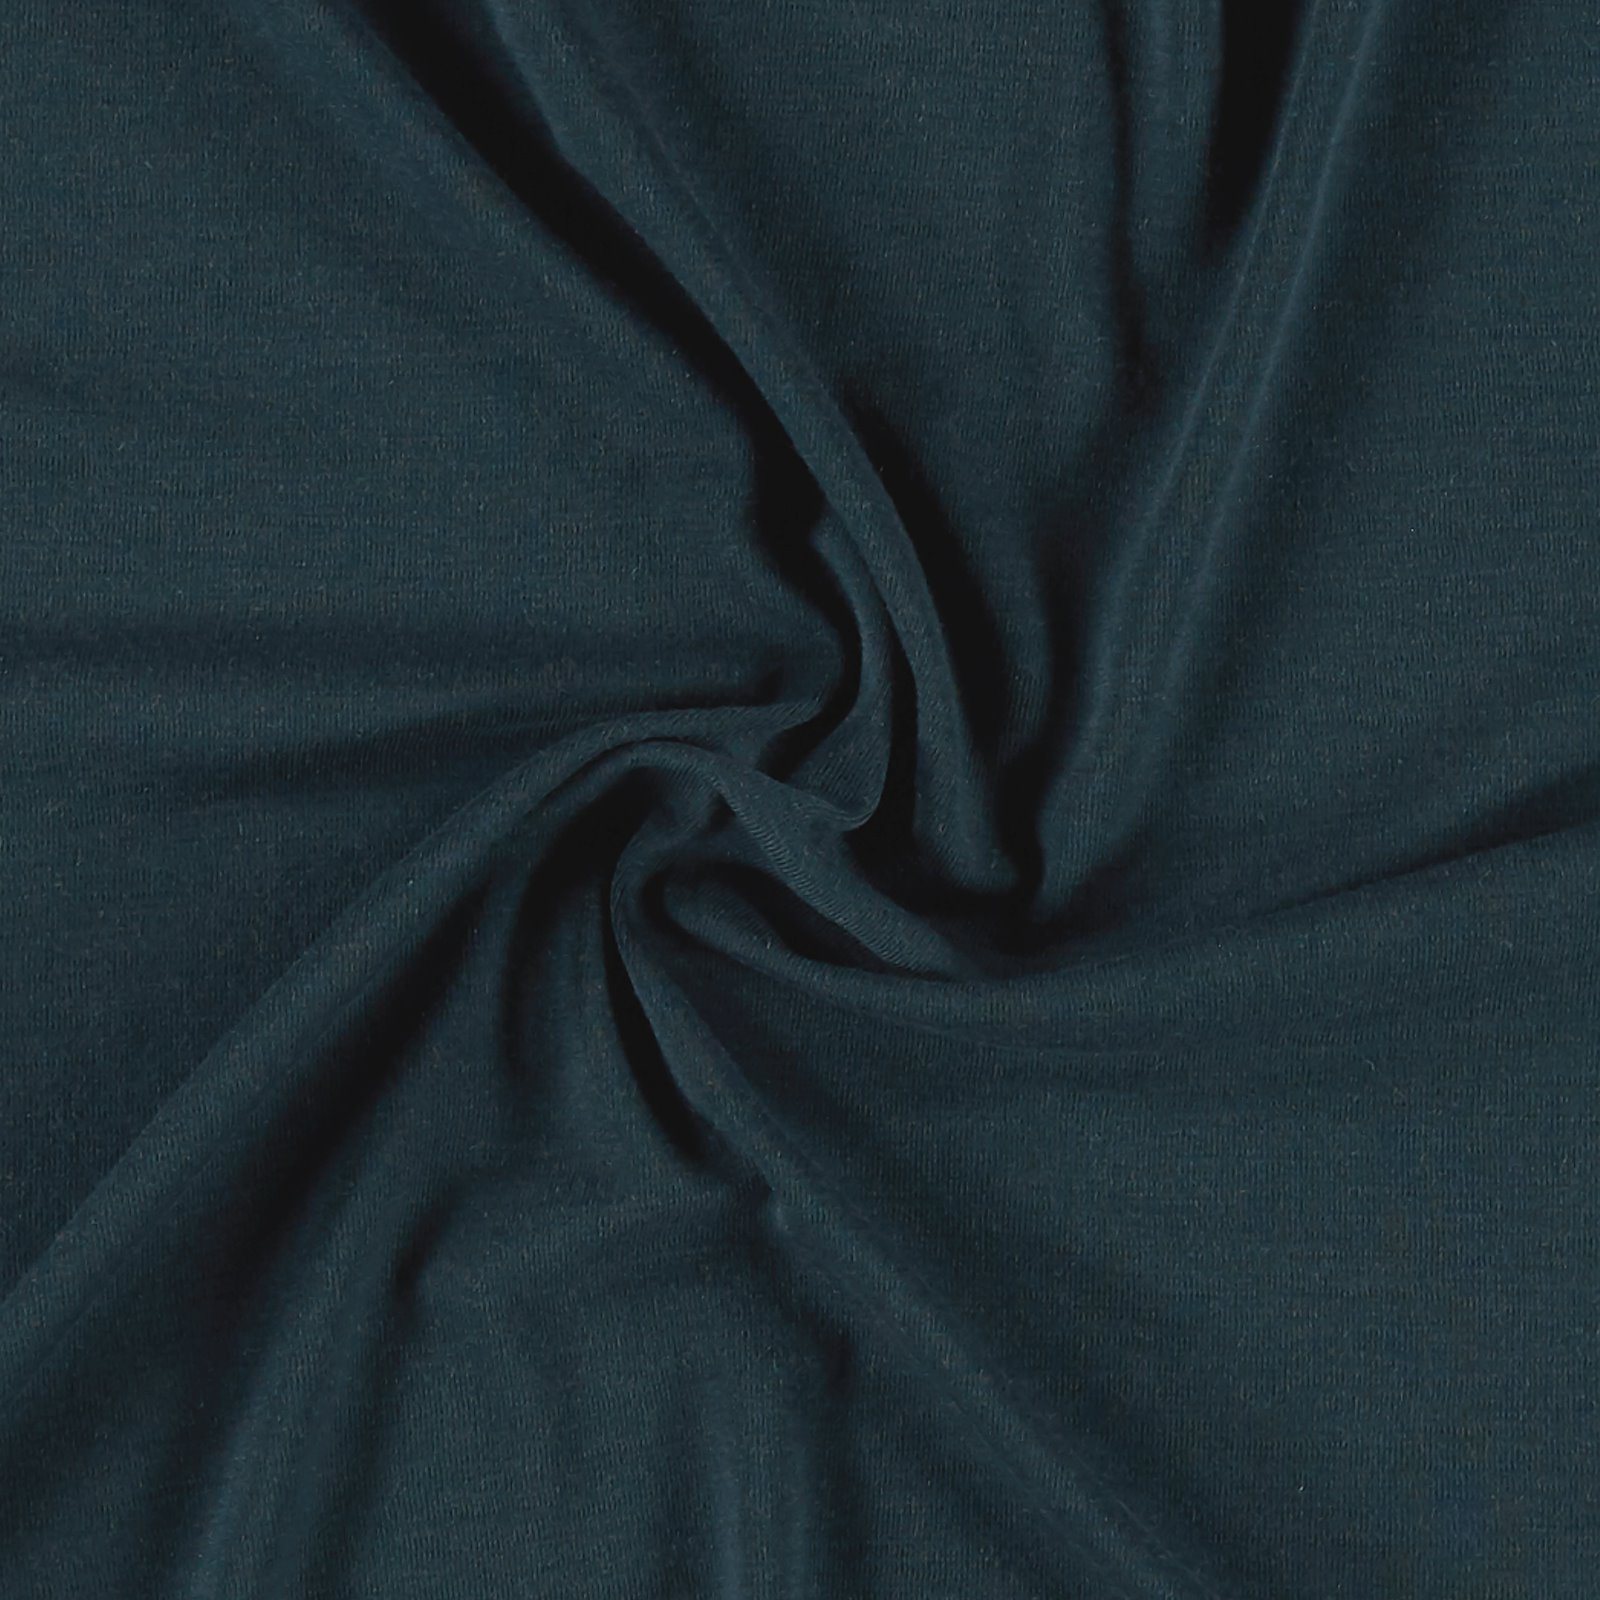 Uld/acryl jersey støvet blå melange 273559_pack